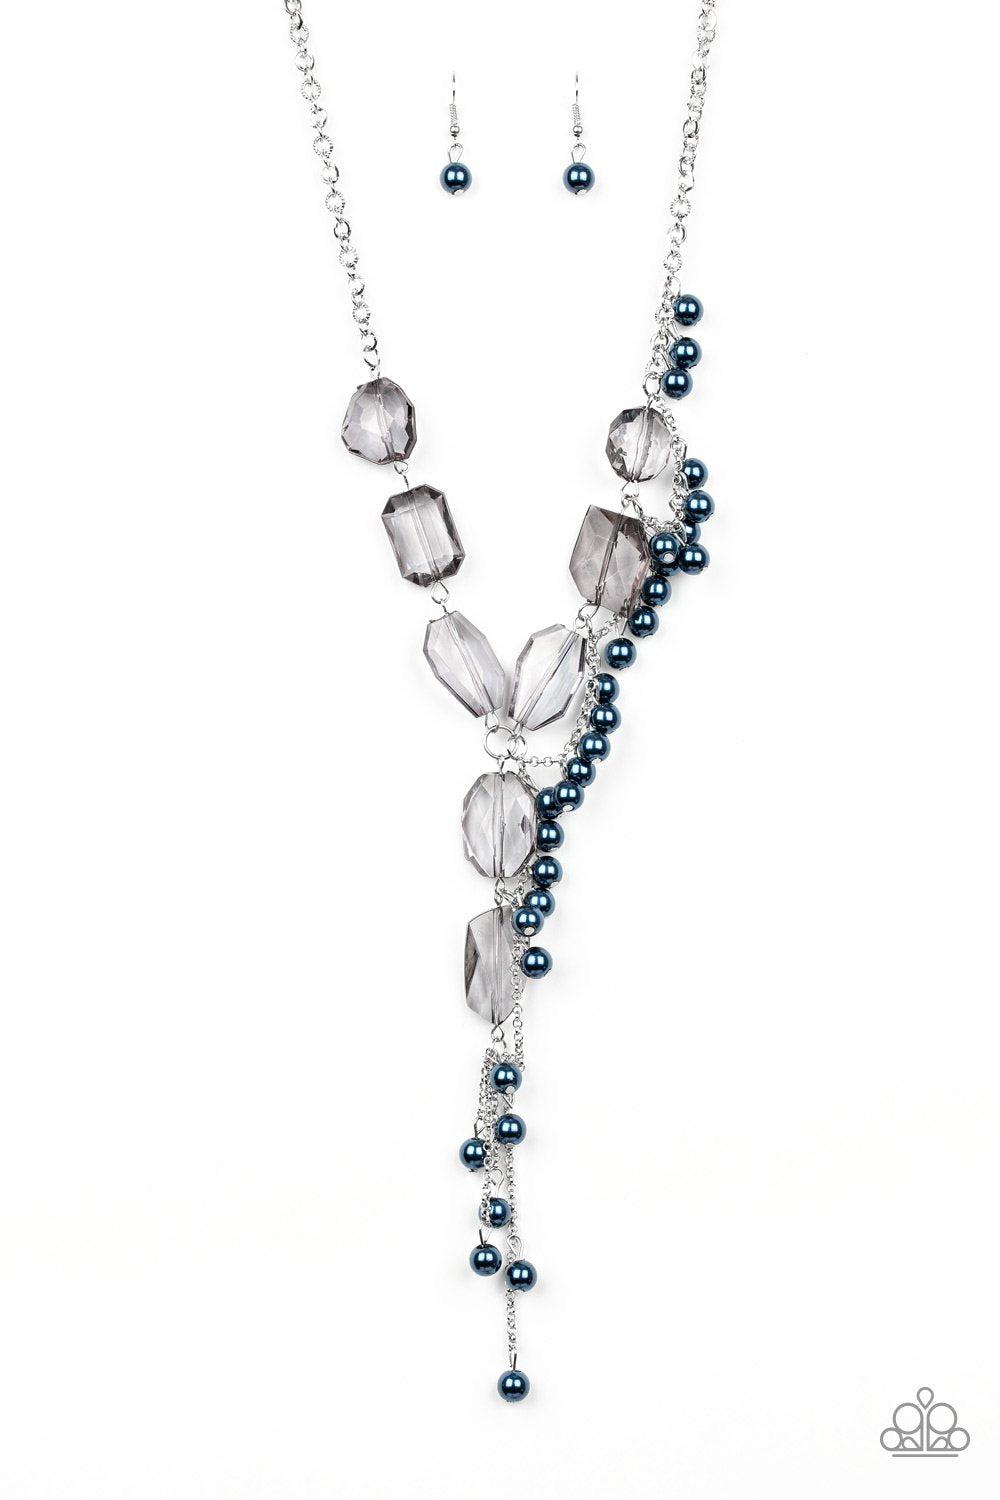 Prismatic Princess Blue Tassel Necklace - Paparazzi Accessories - lightbox -CarasShop.com - $5 Jewelry by Cara Jewels